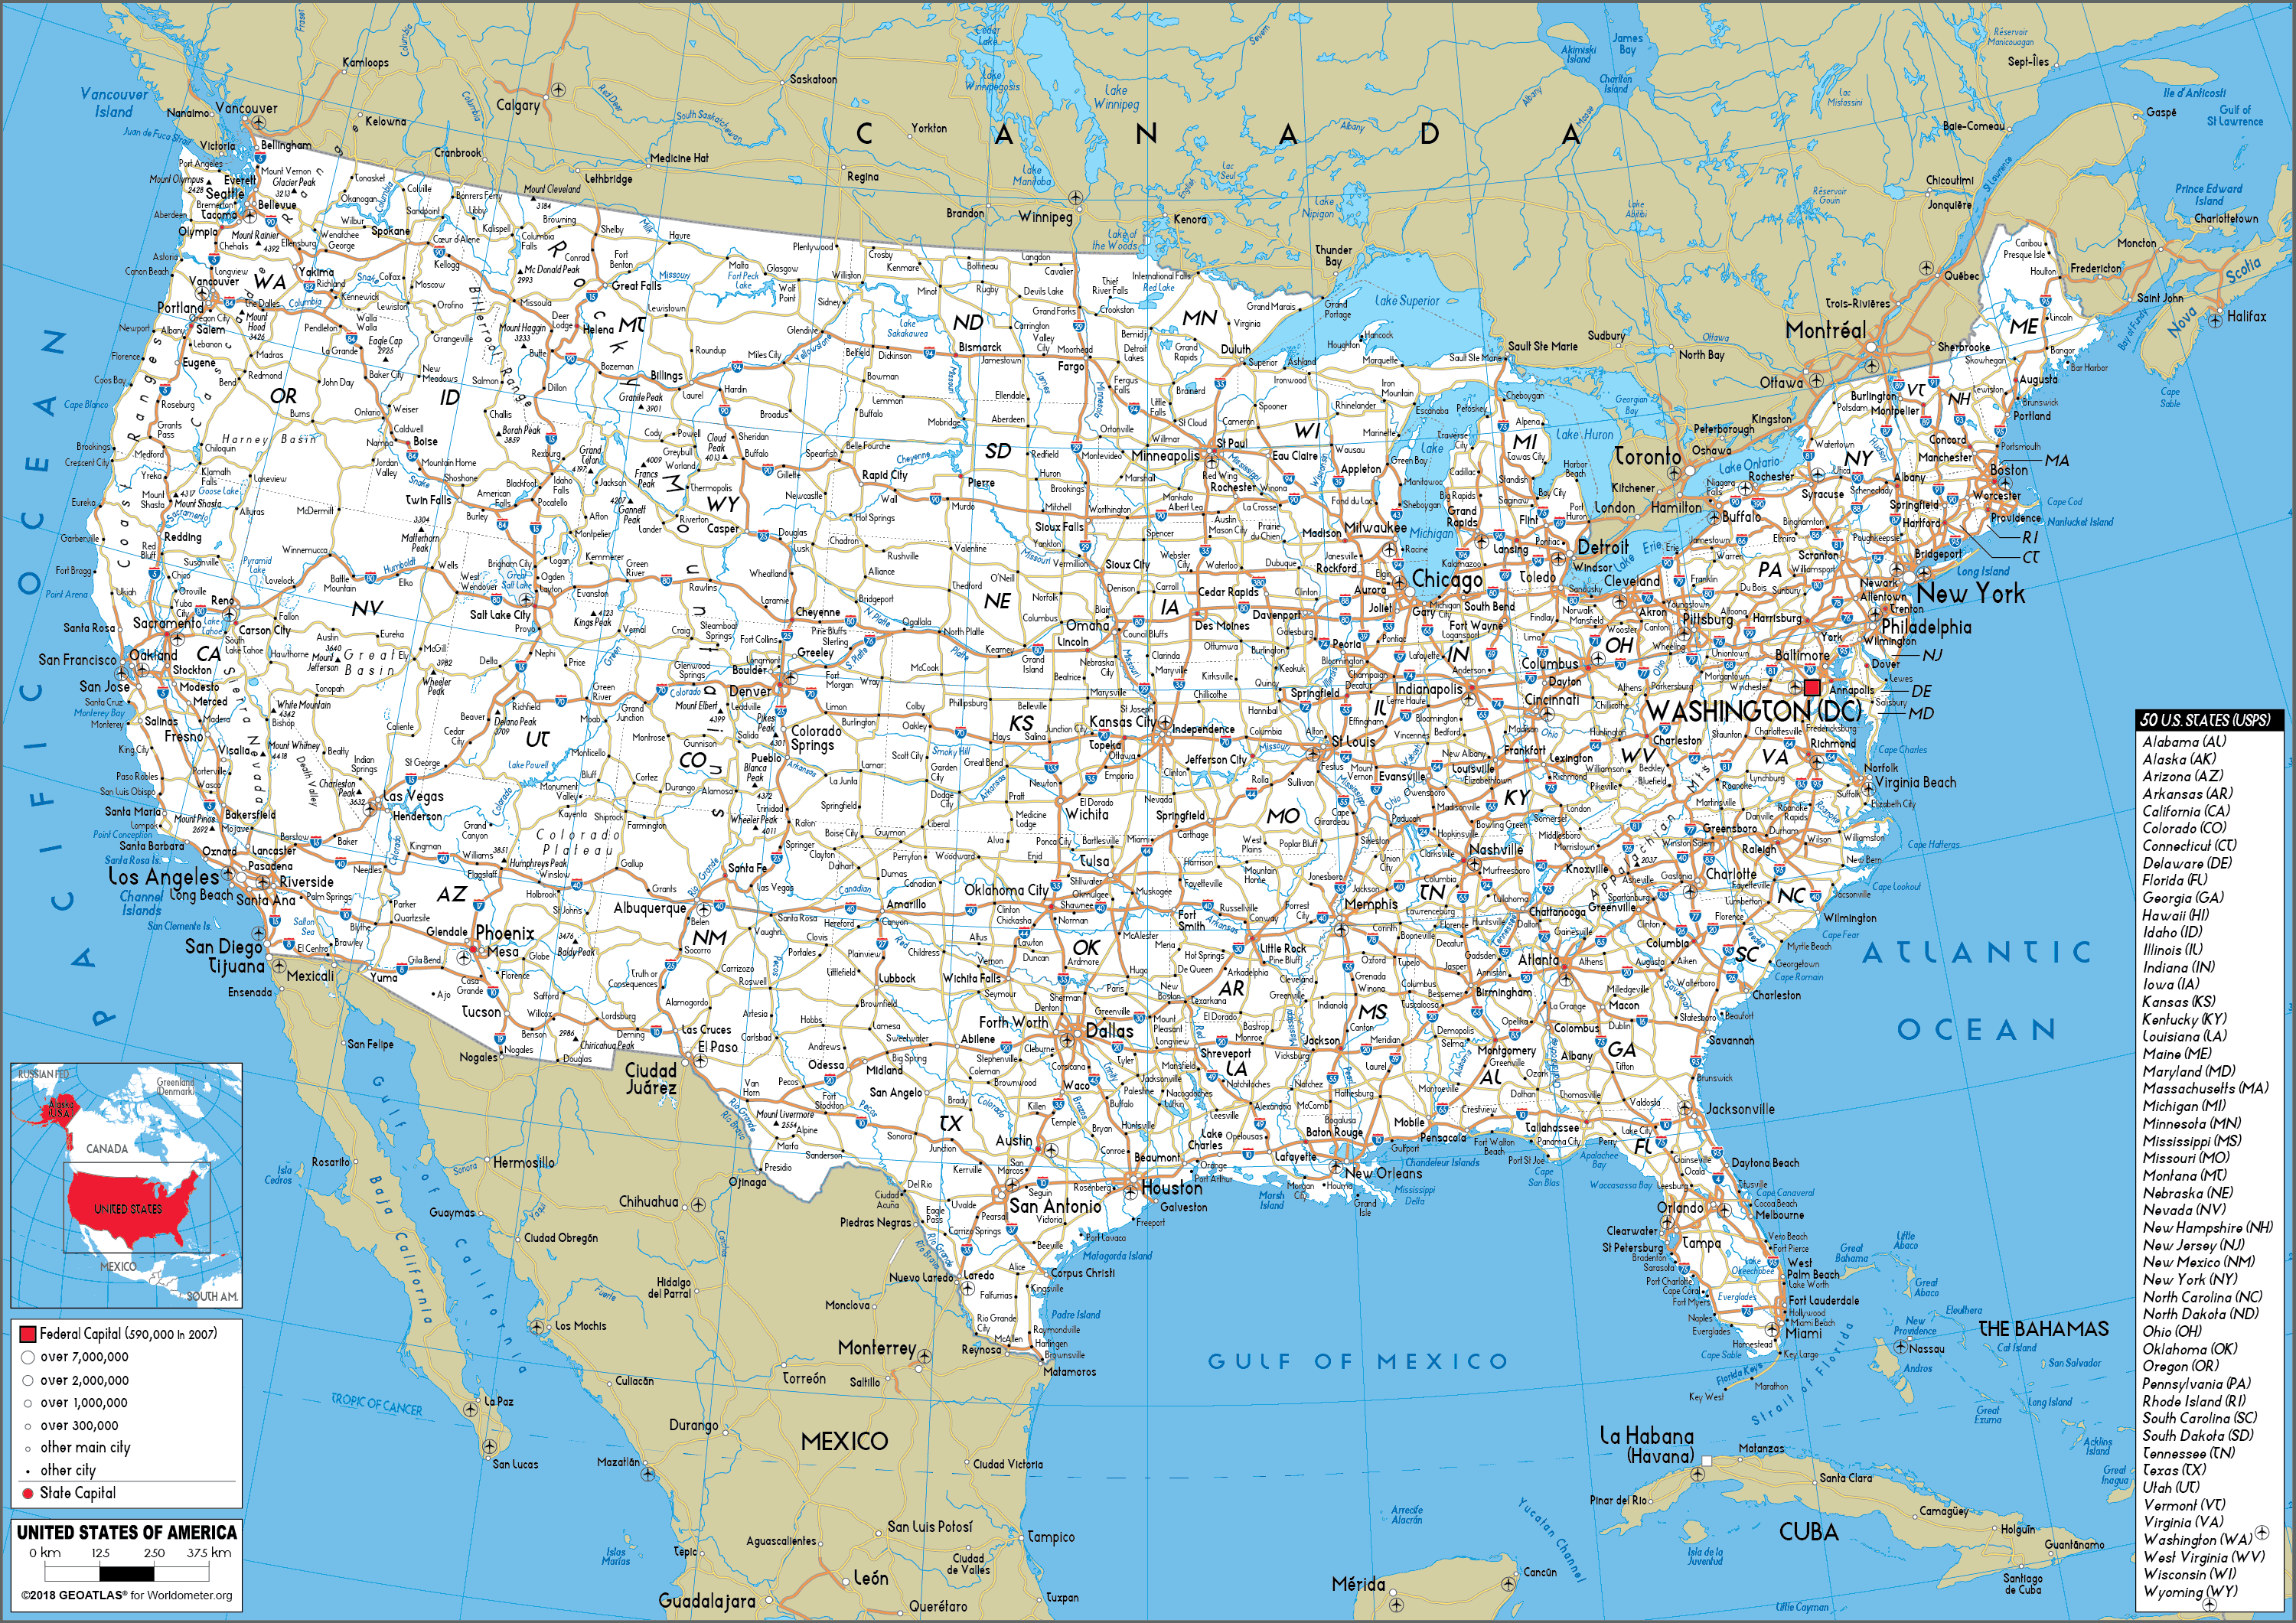 United States Map Road Worldometer